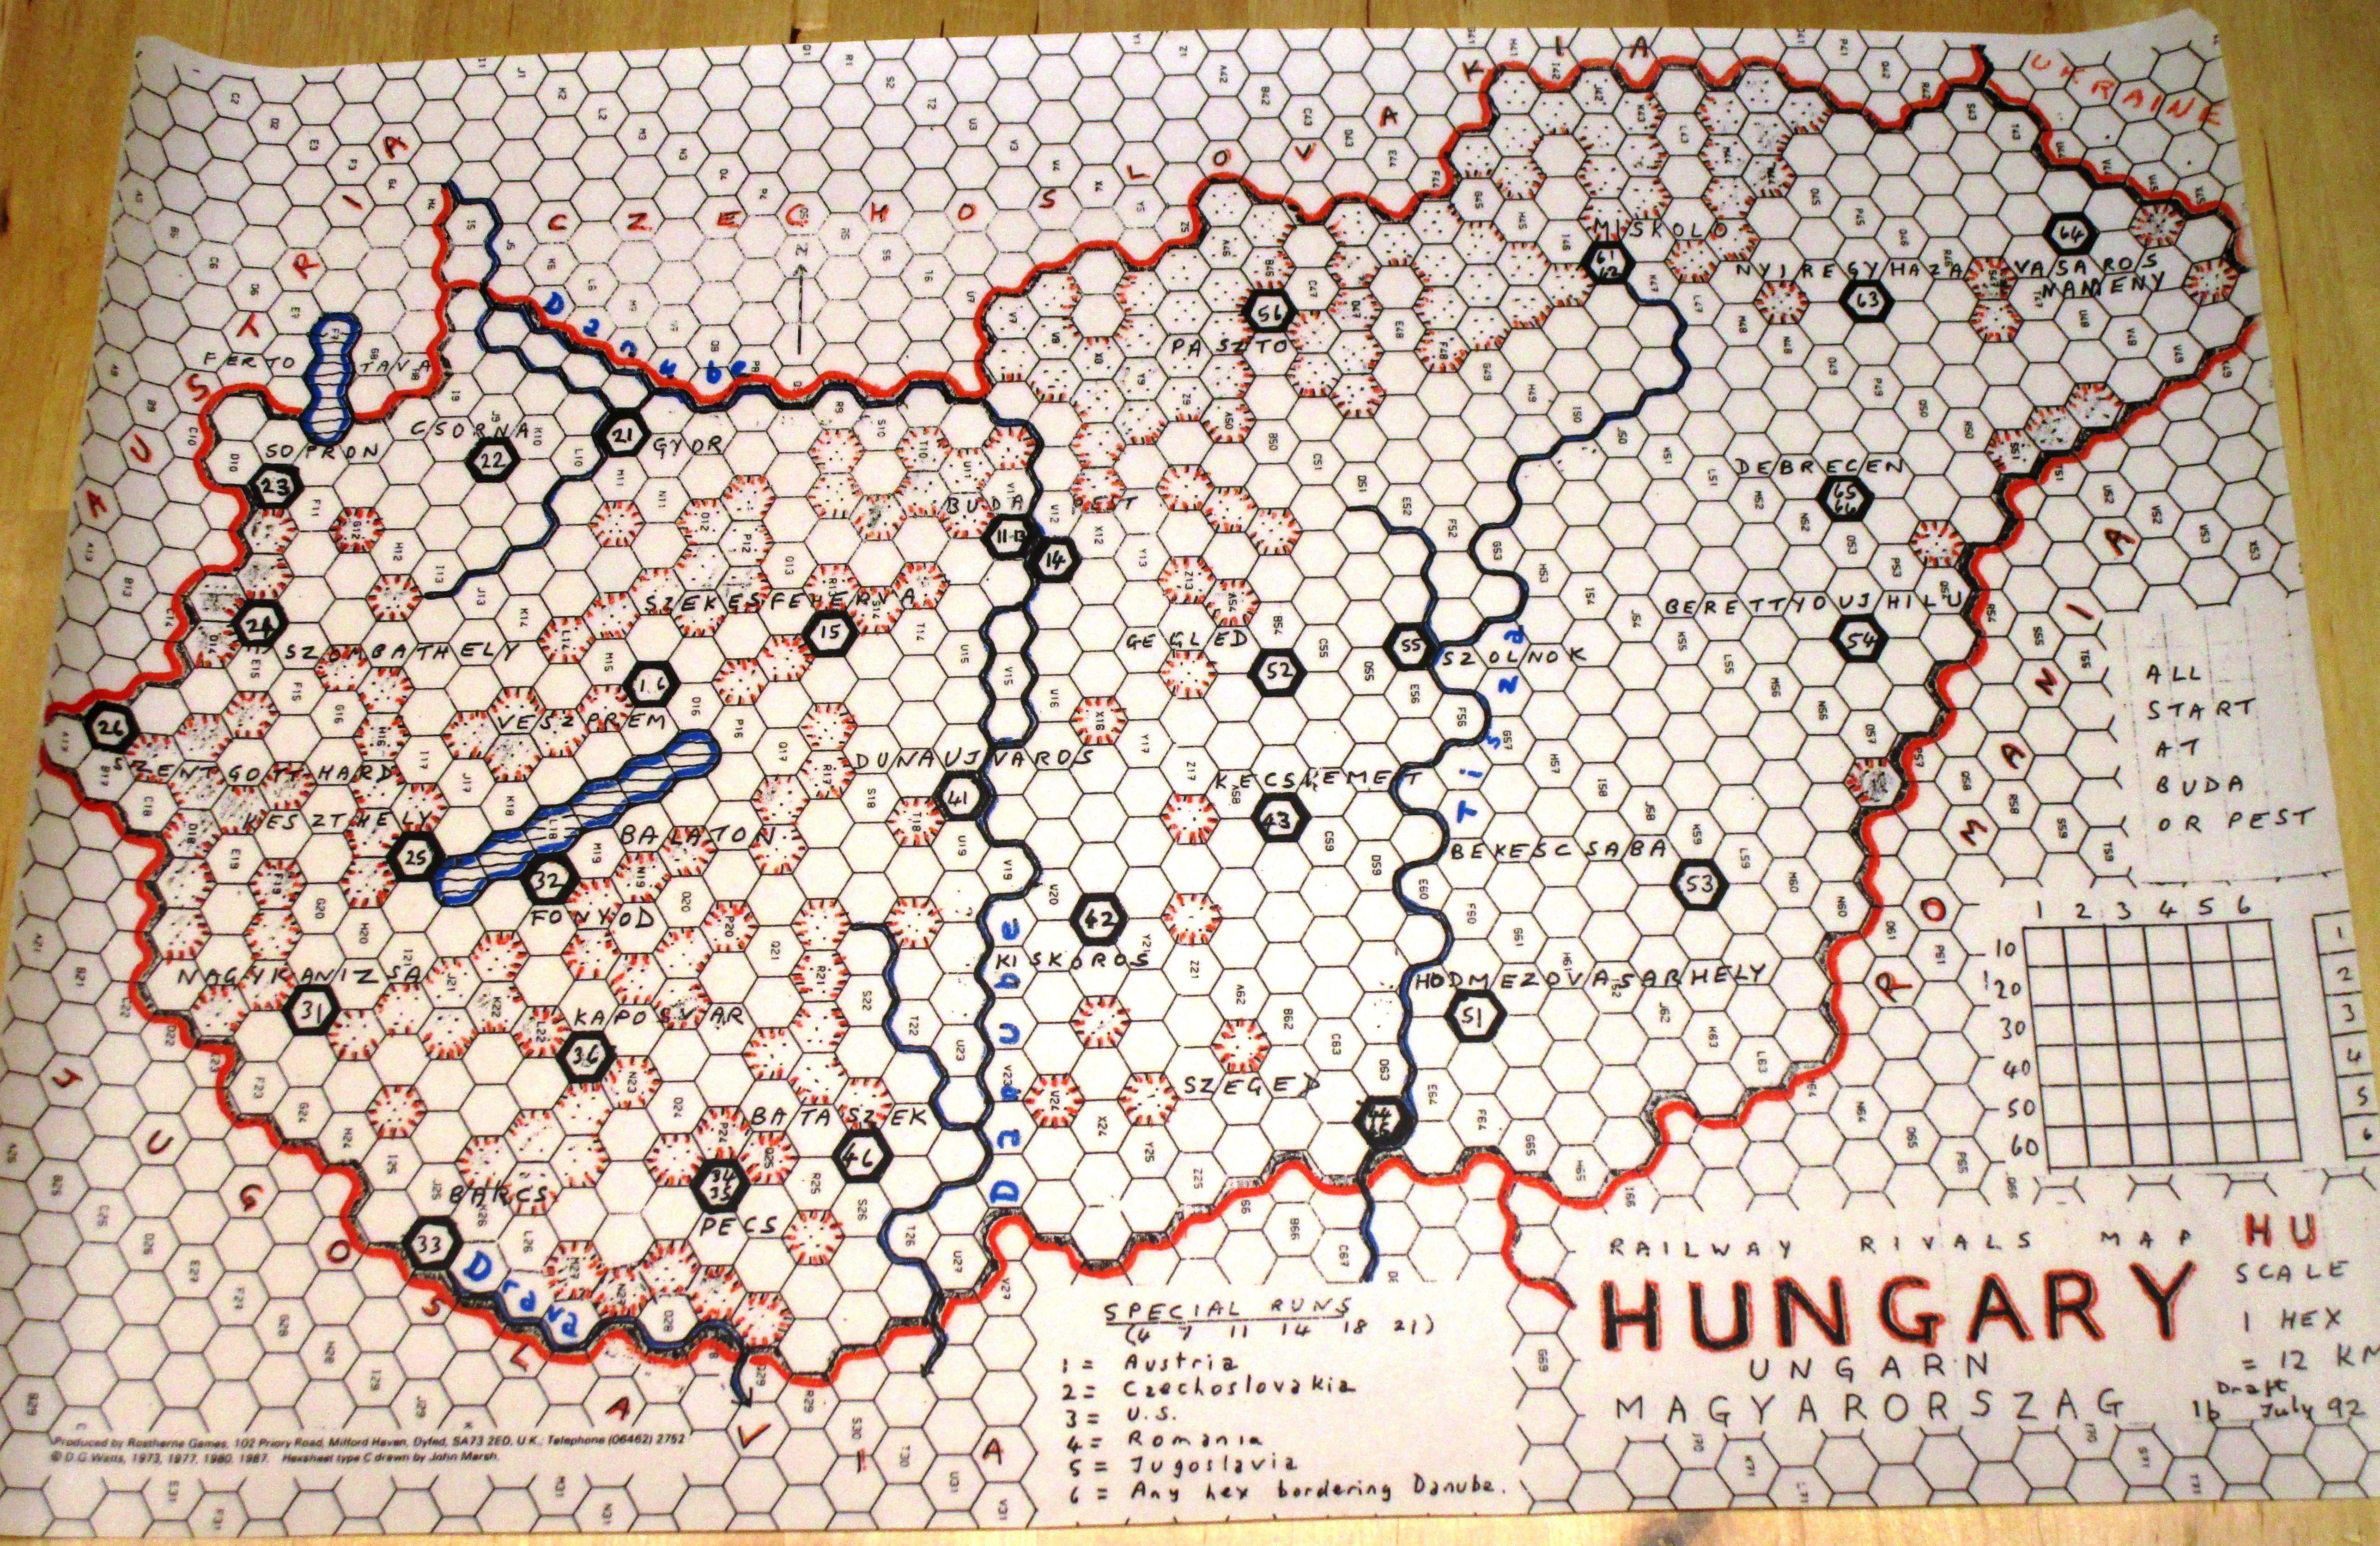 Railway Rivals Map HU: Hungary